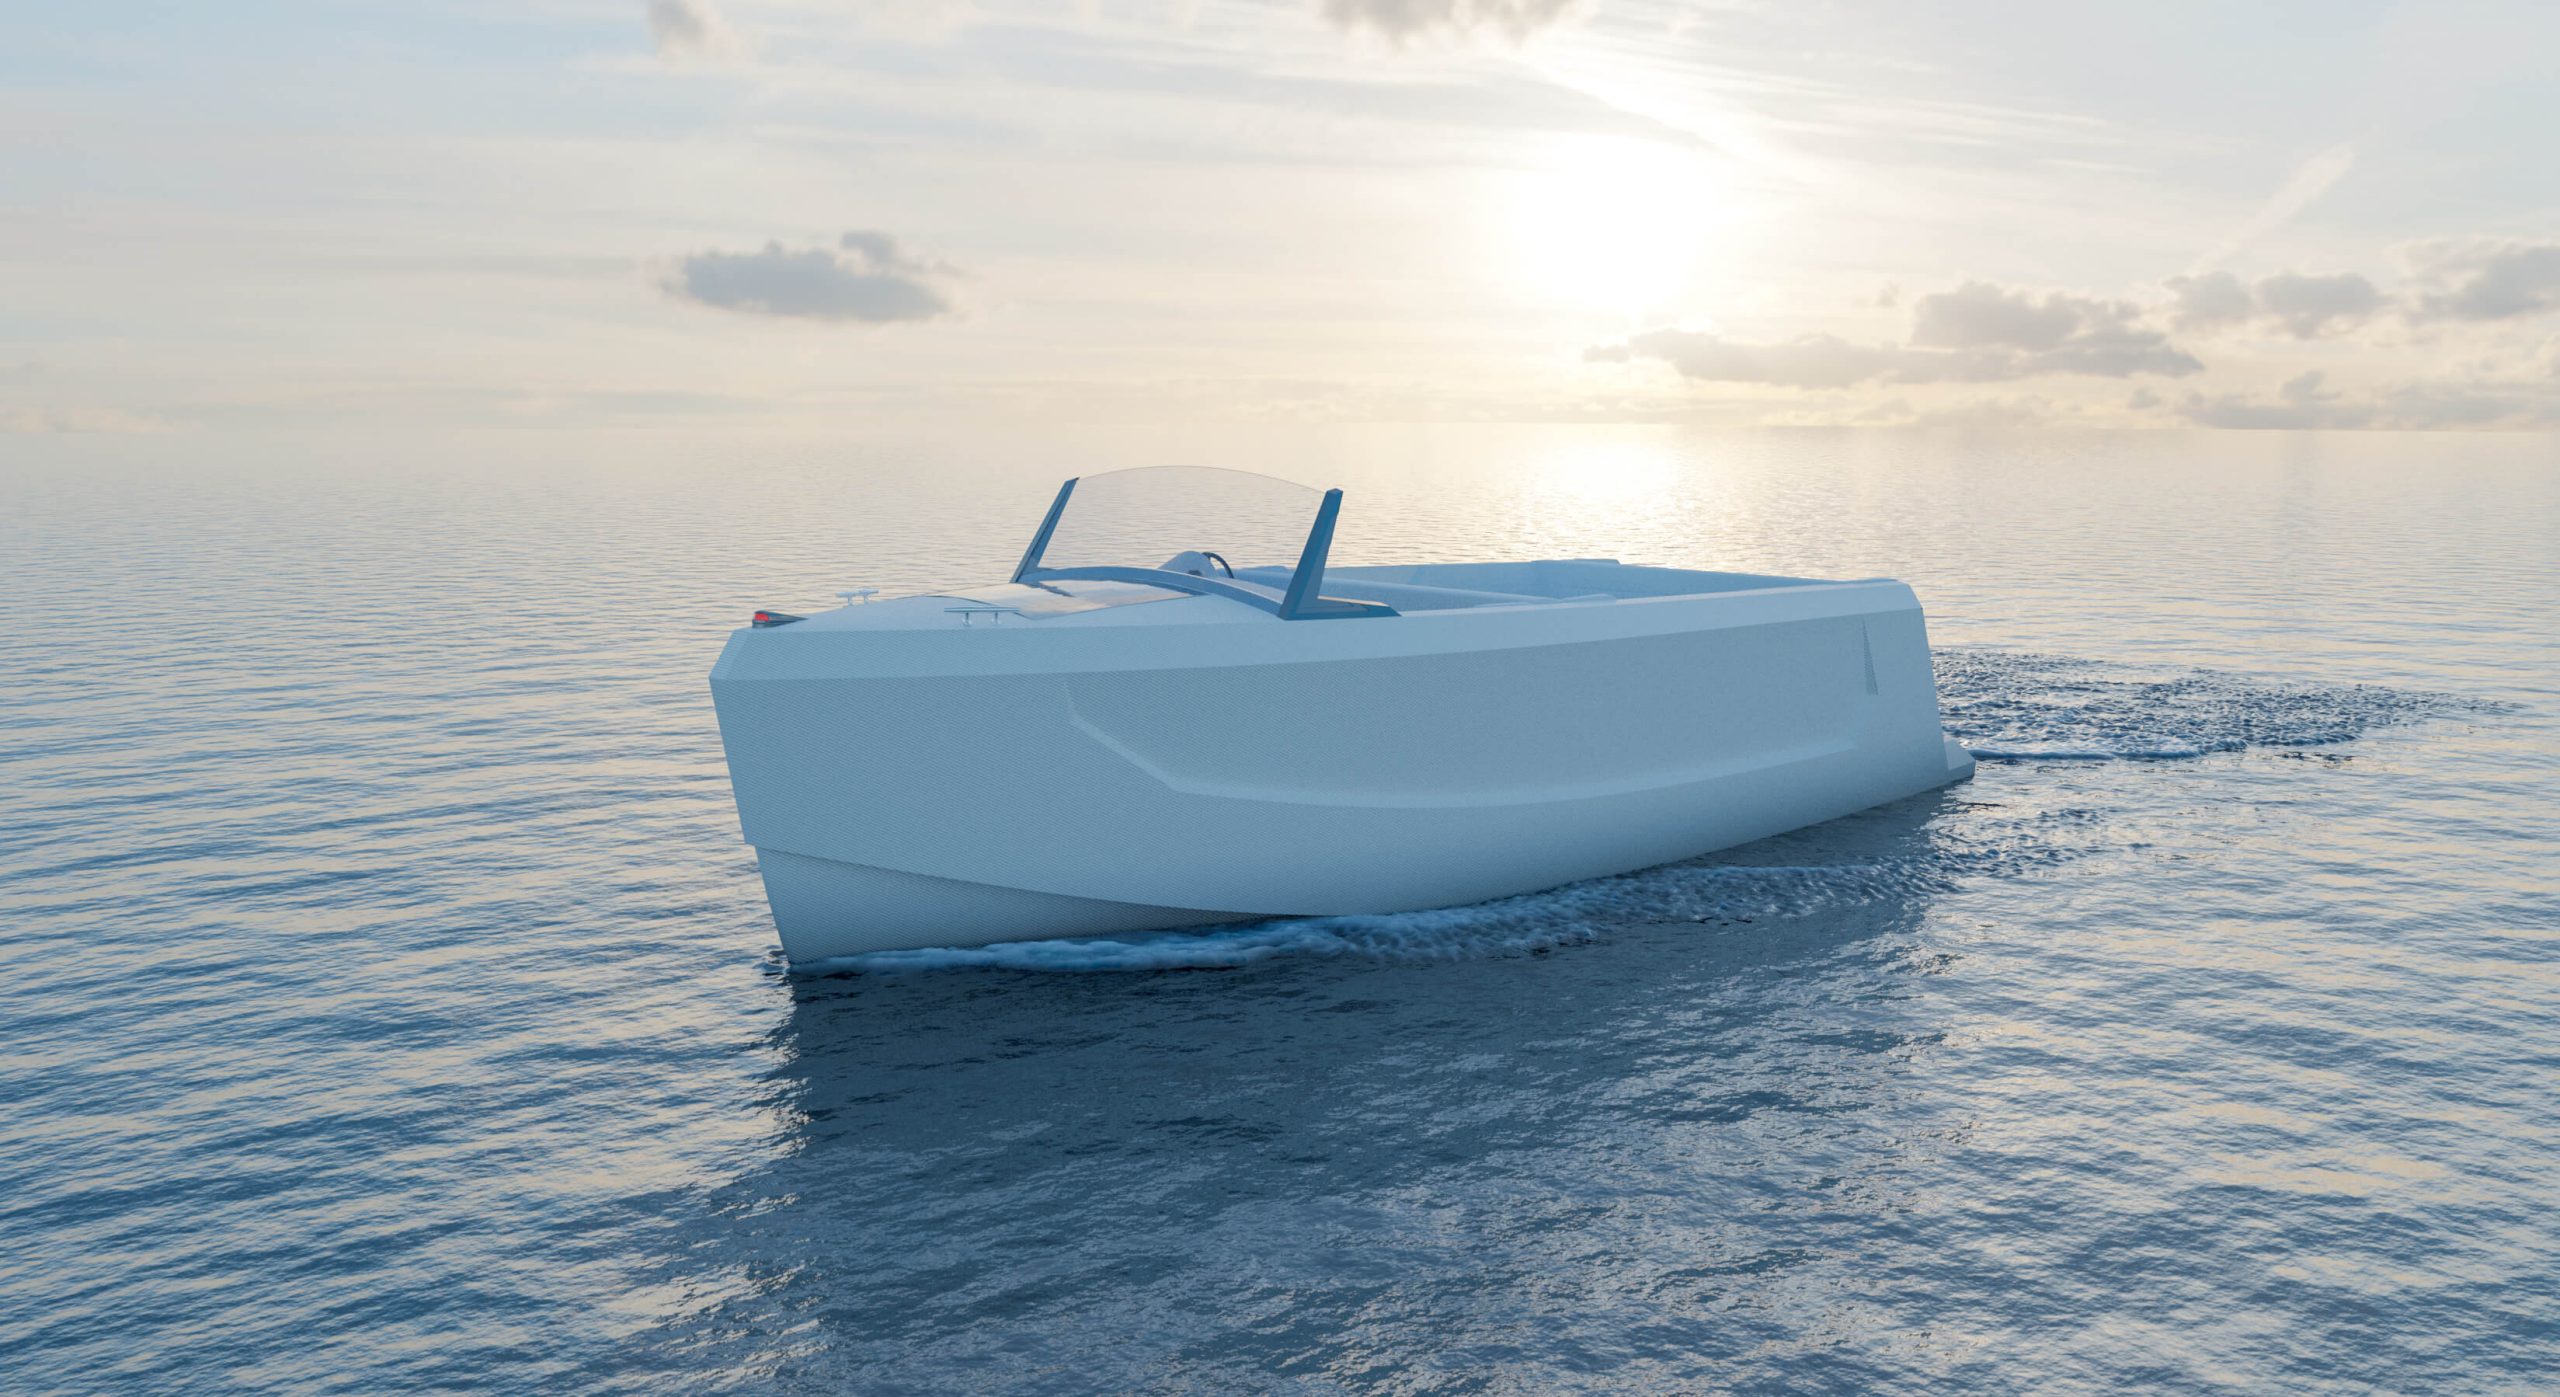 Tanaruz's DSI model 3D printed yacht. Image via Tanaruz.